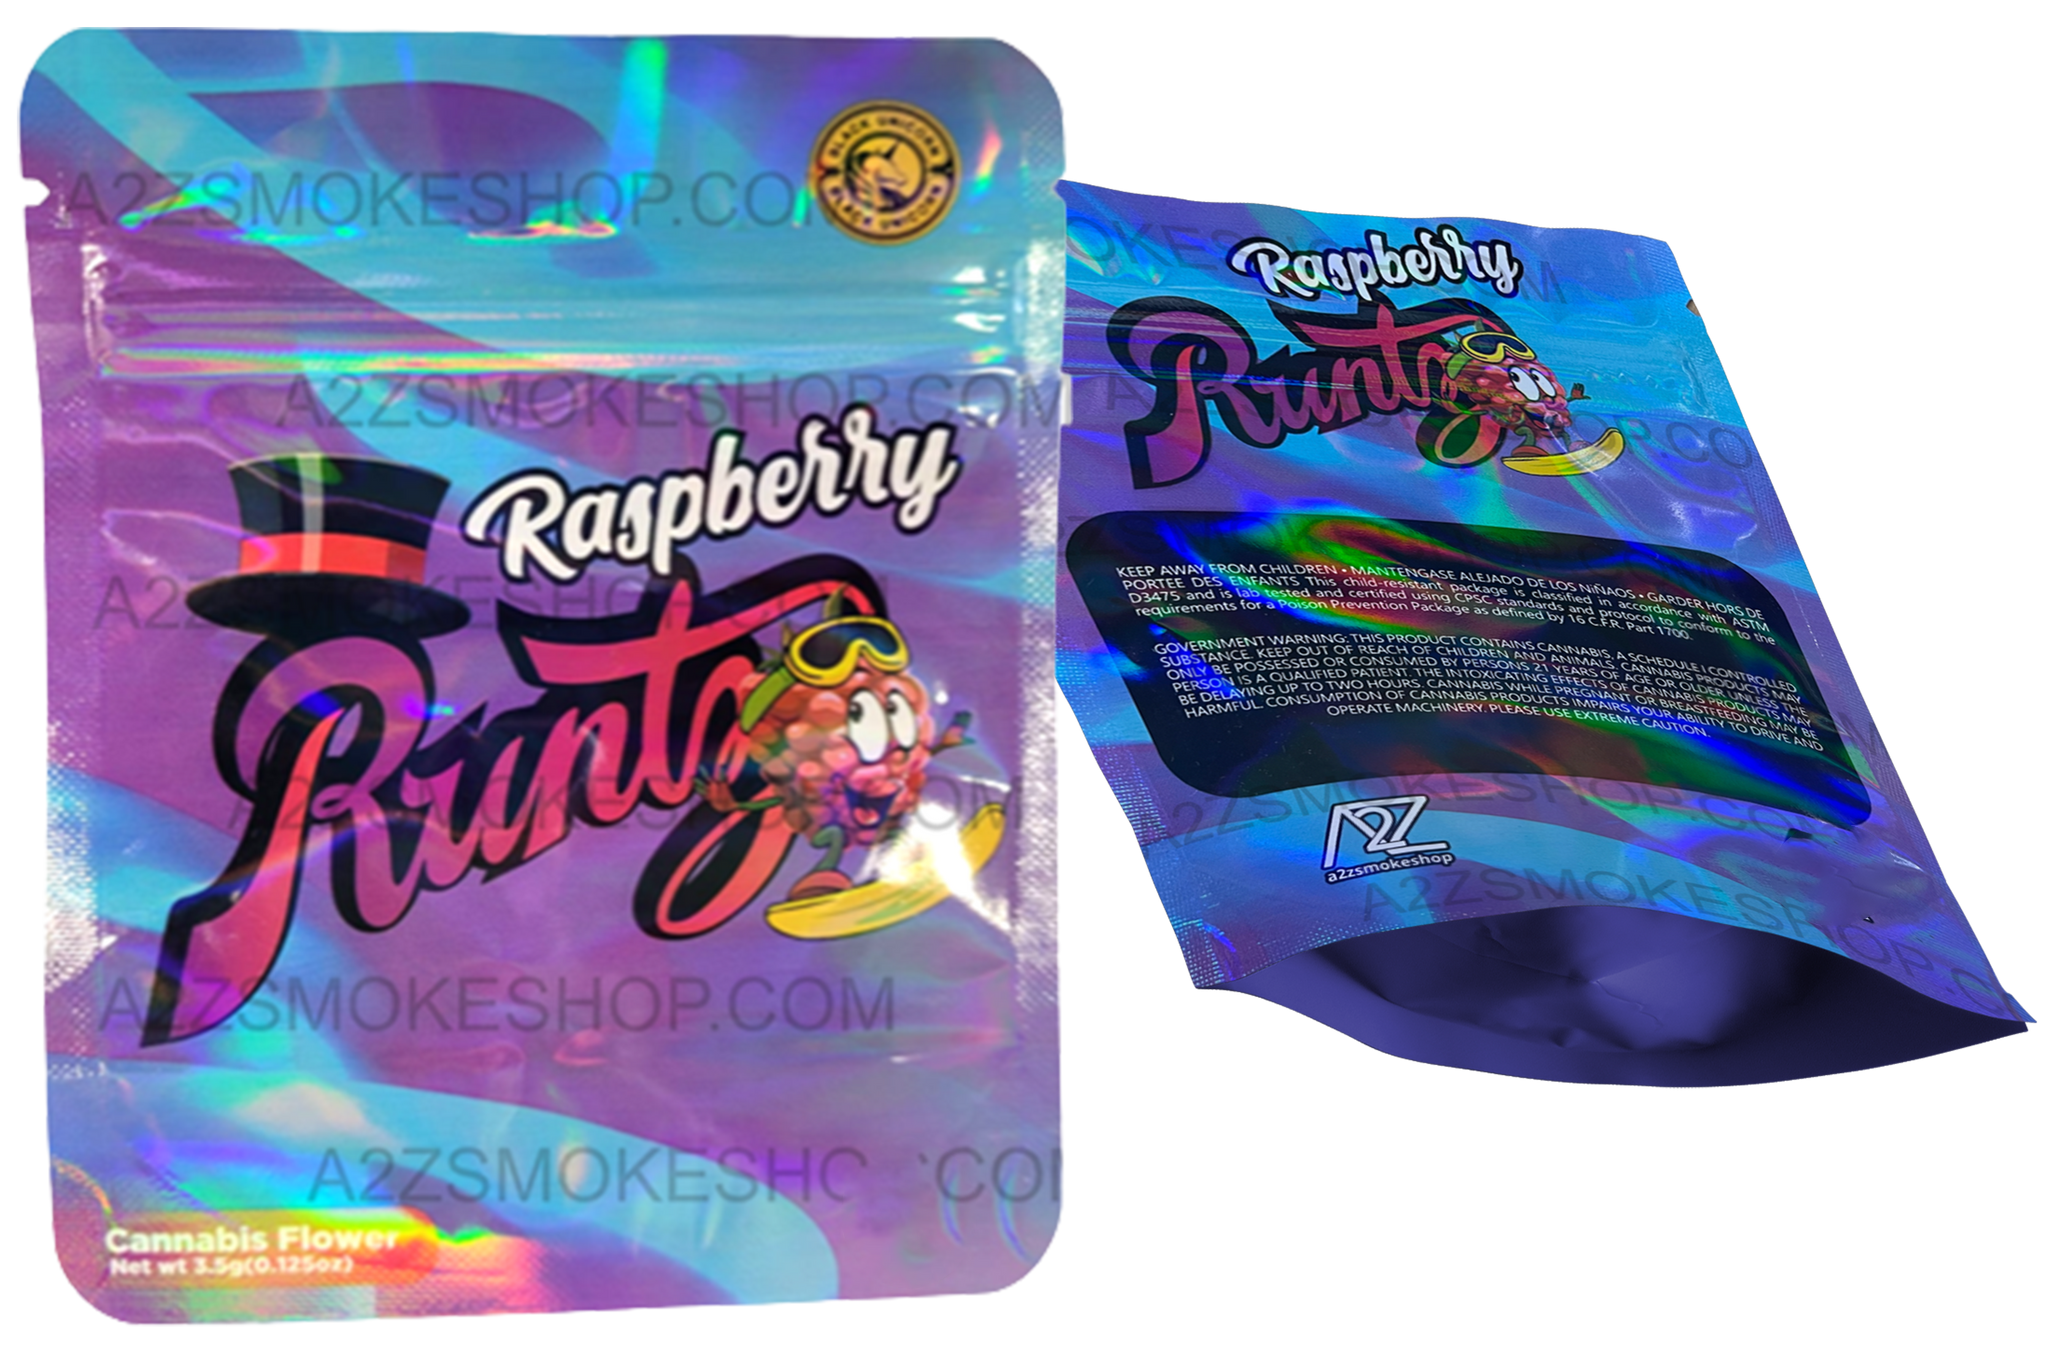 Black Unicorn Raspberry Runtz Holographic Mylar bag 3.5g